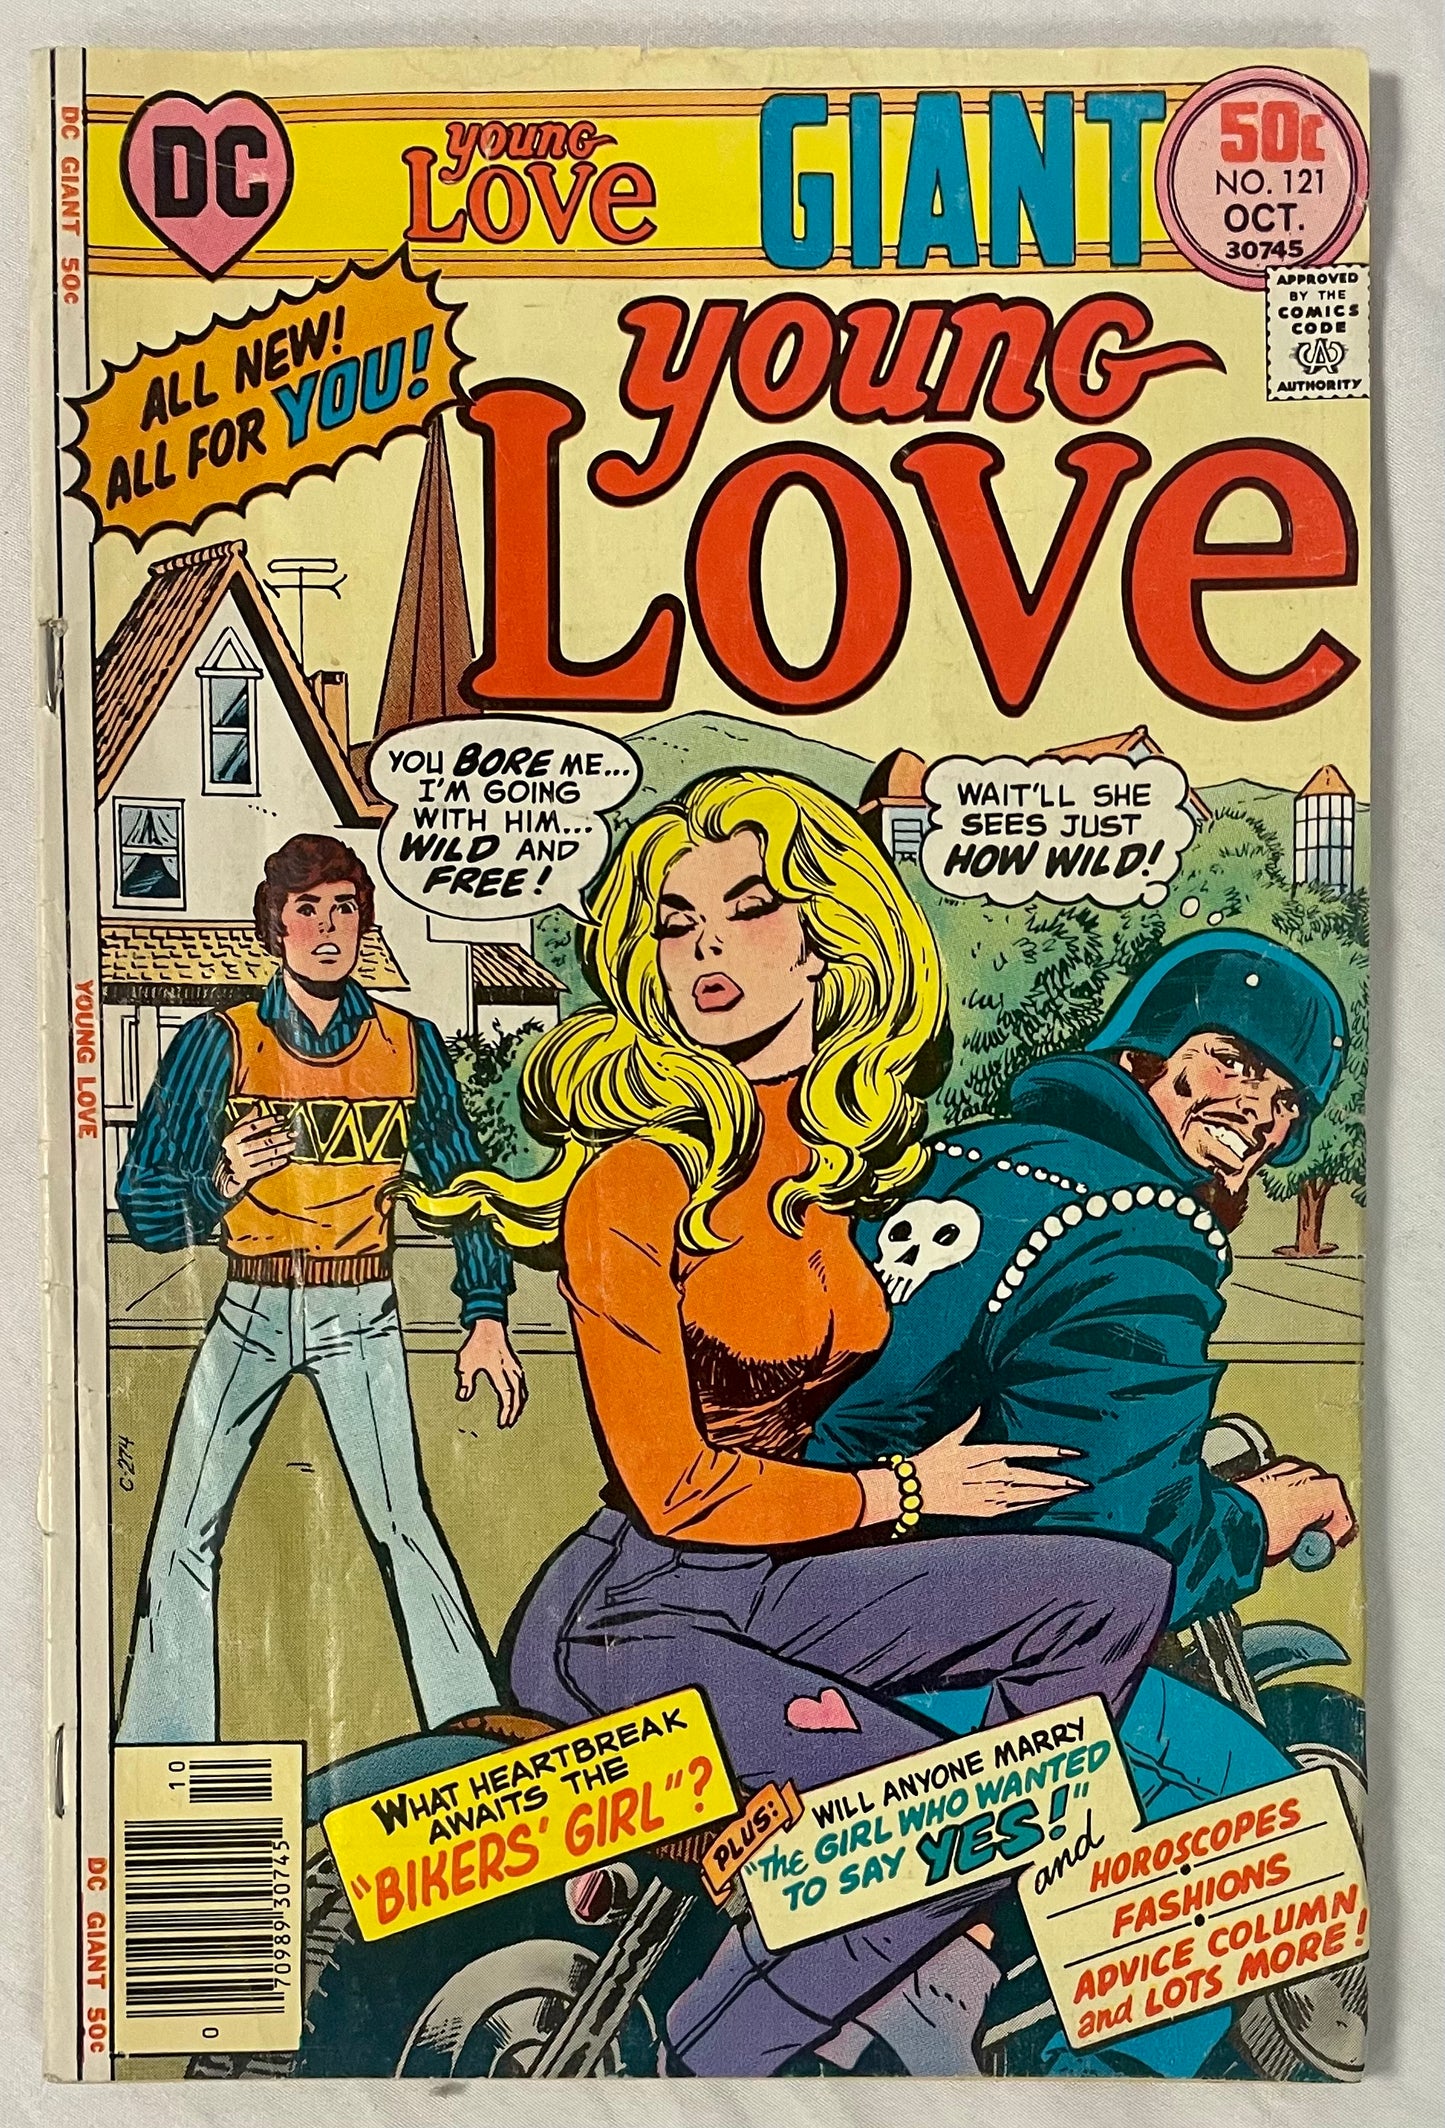 DC Comics Young Love Giant No. 121